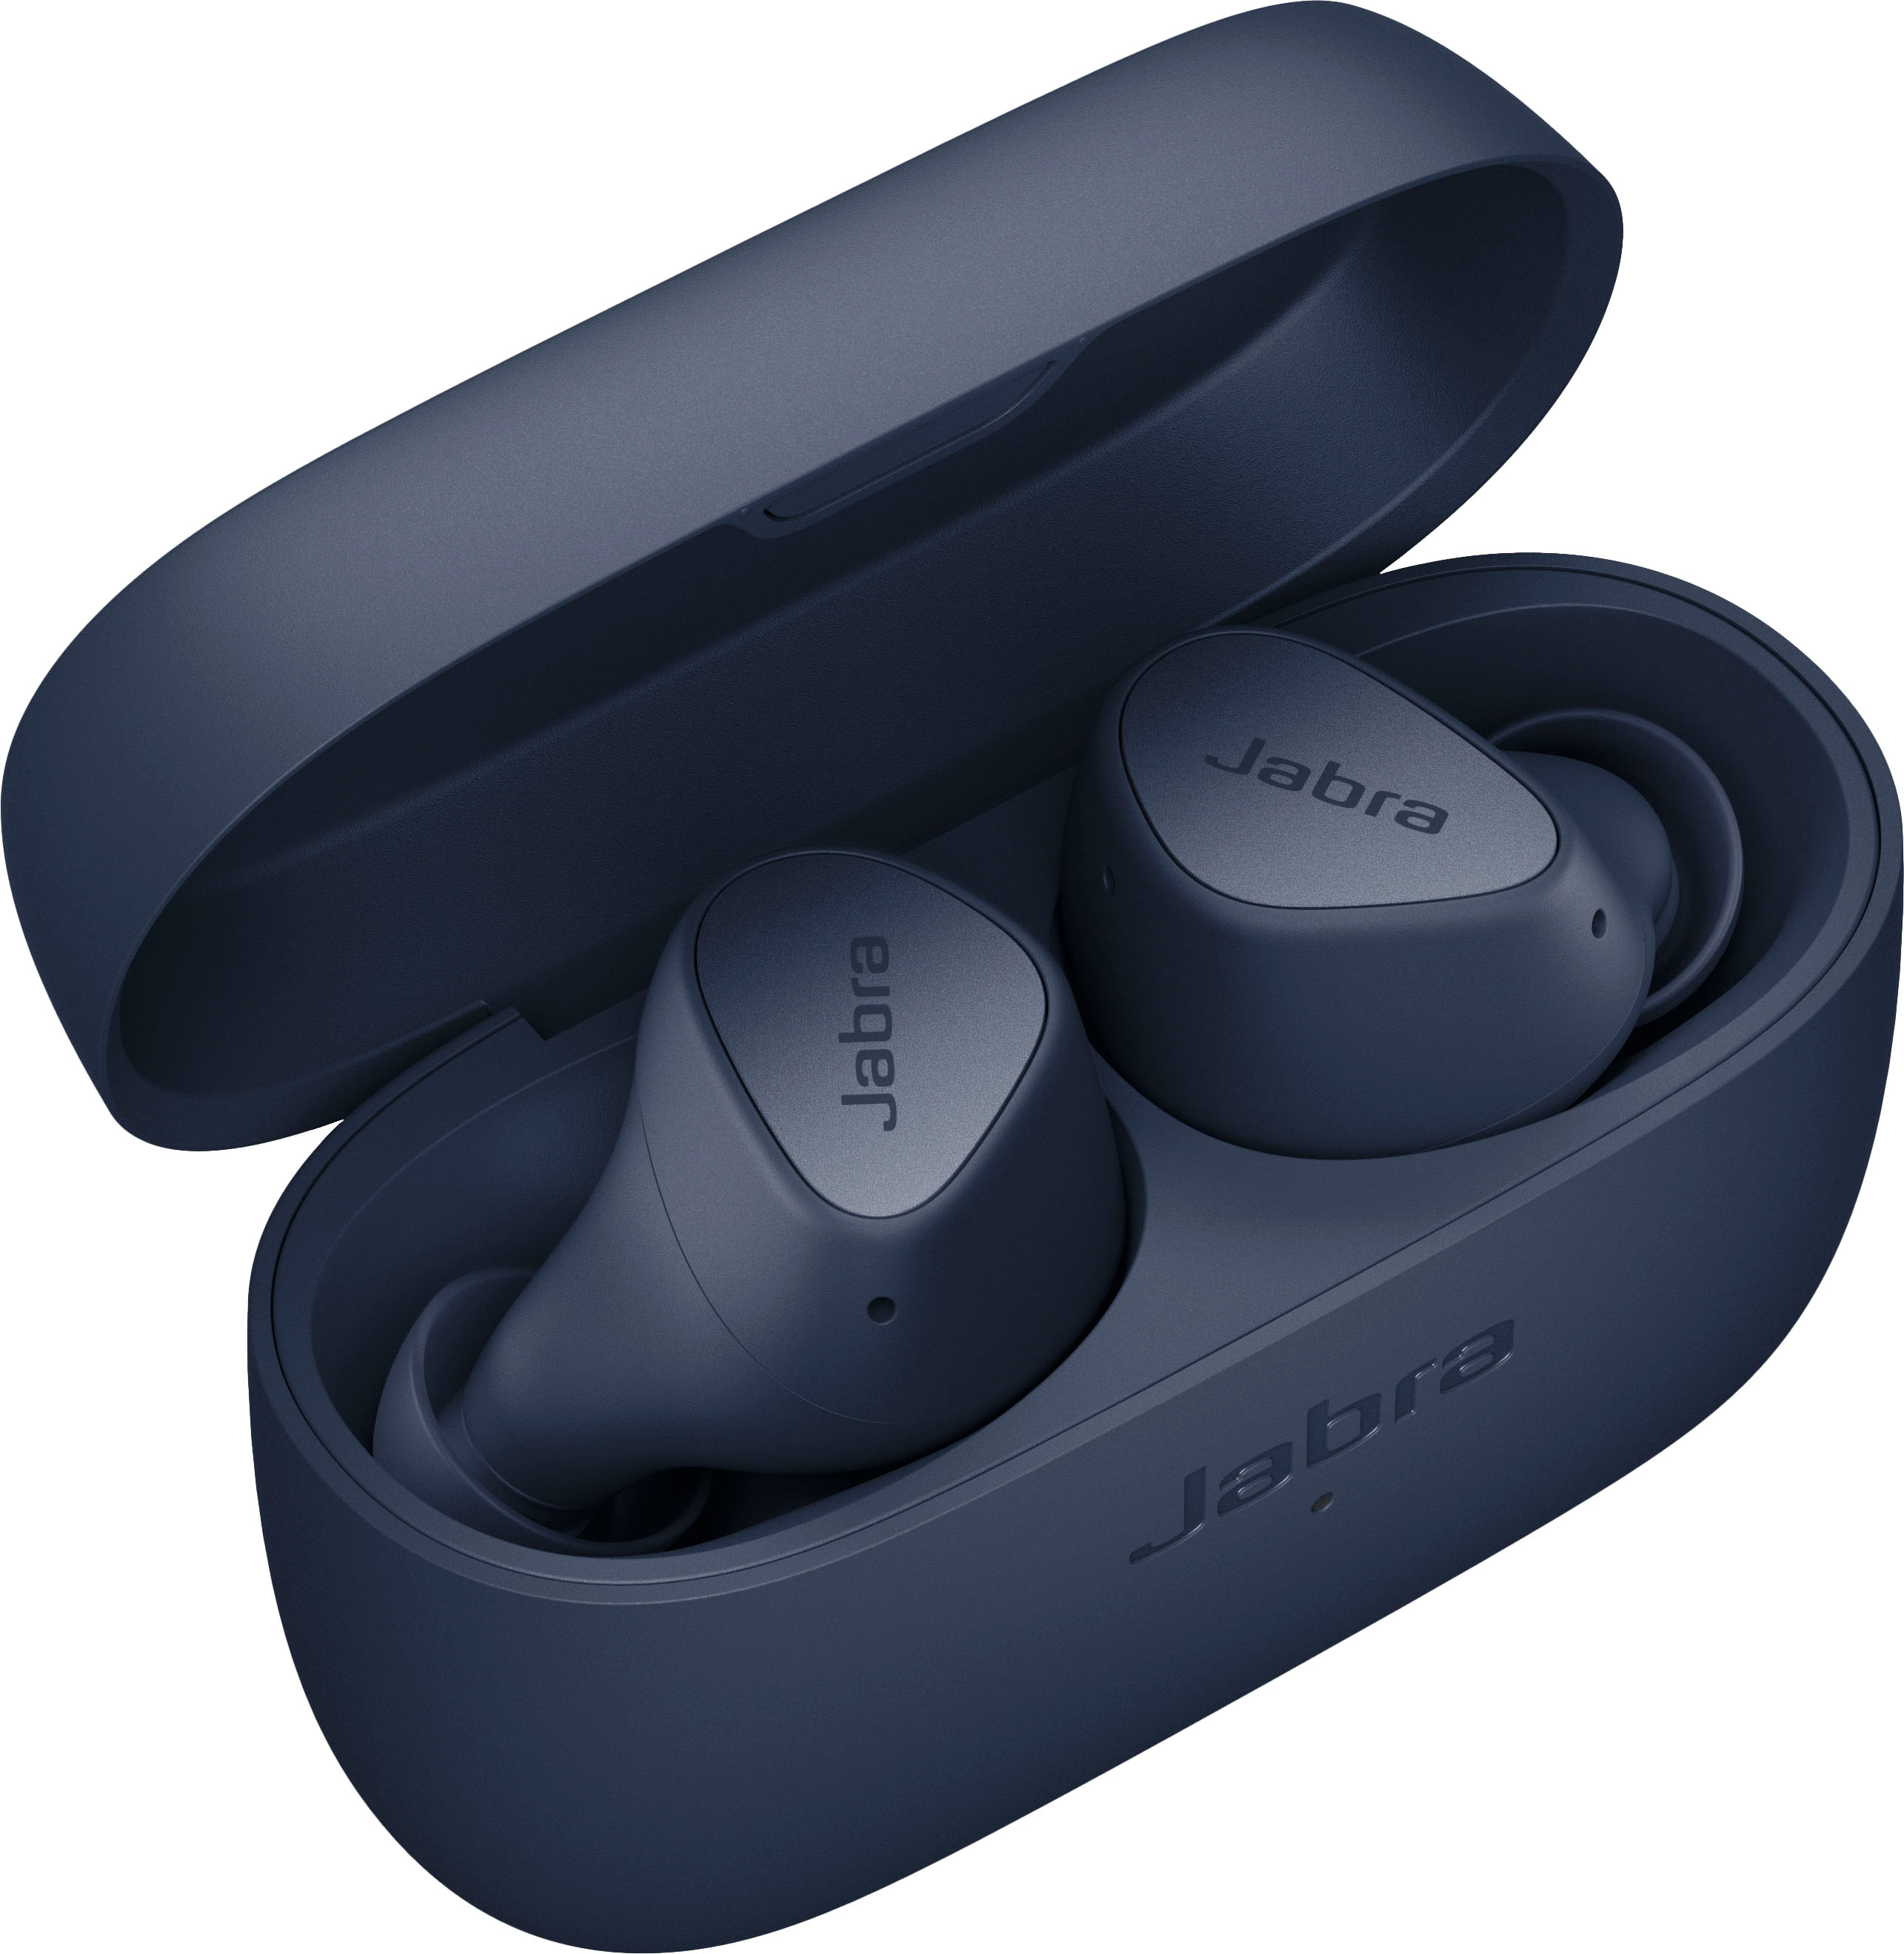 Angle View: Jabra - Elite 4 True Wireless Noise Cancelling In-ear Headphones - Navy